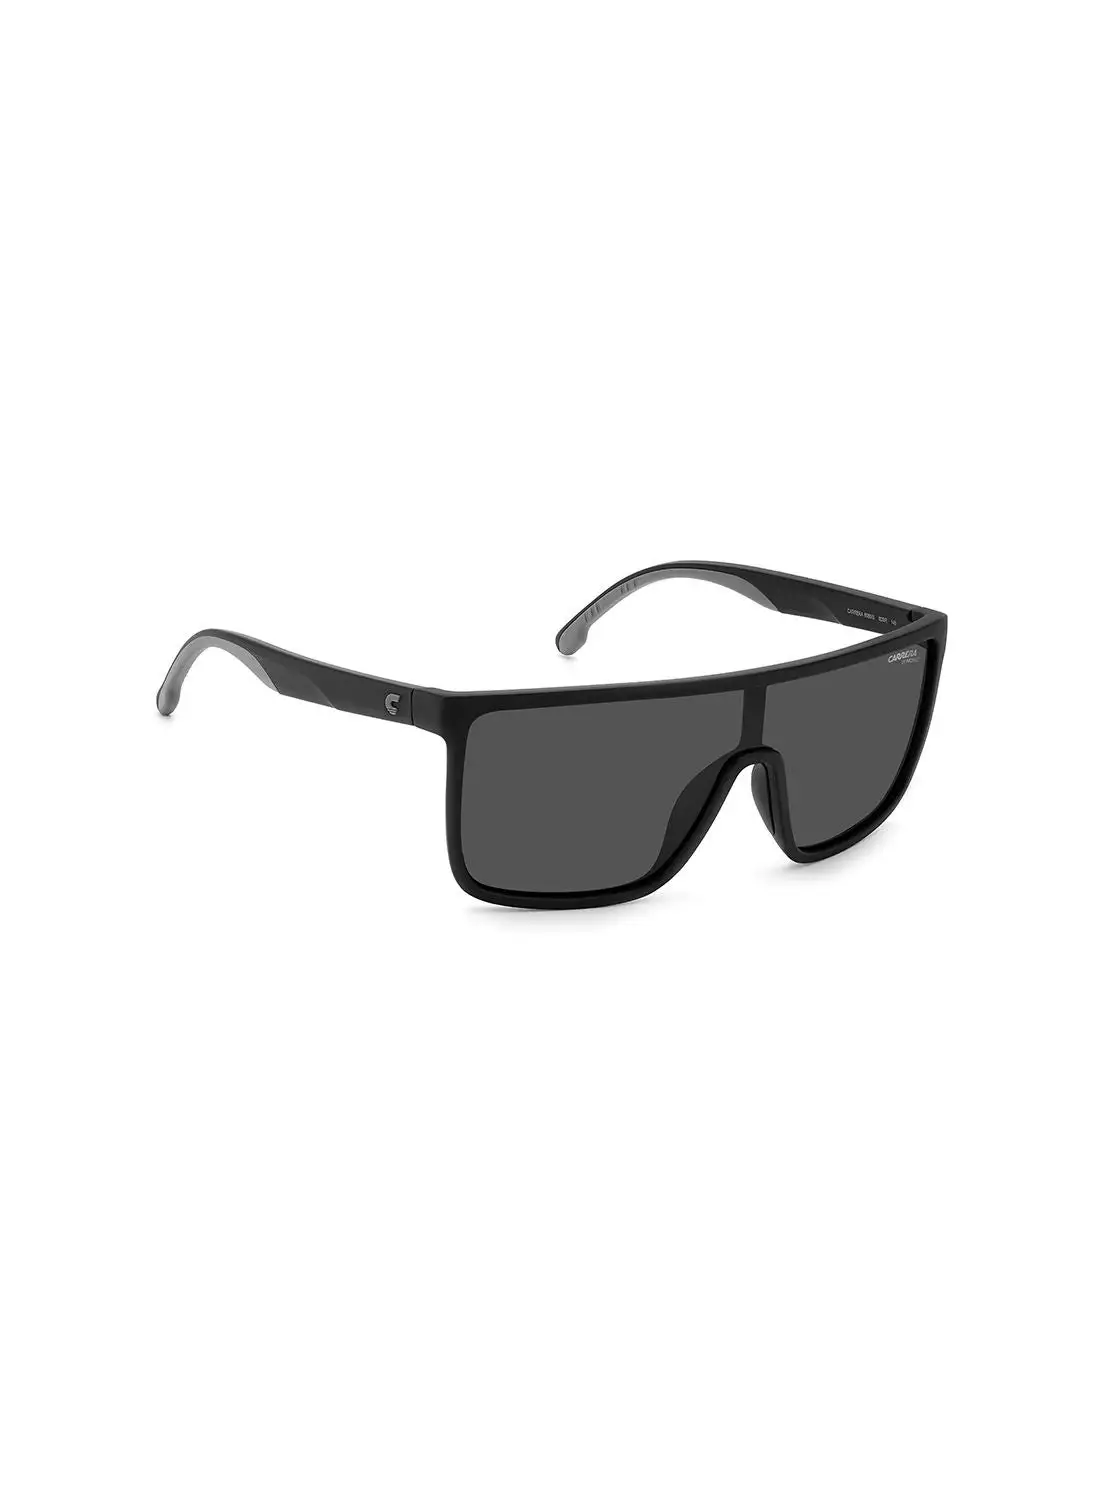 Carrera Unisex UV Protection Sunglasses - Carrera 8060/S Matte Black 99 - Lens Size: 99 Mm